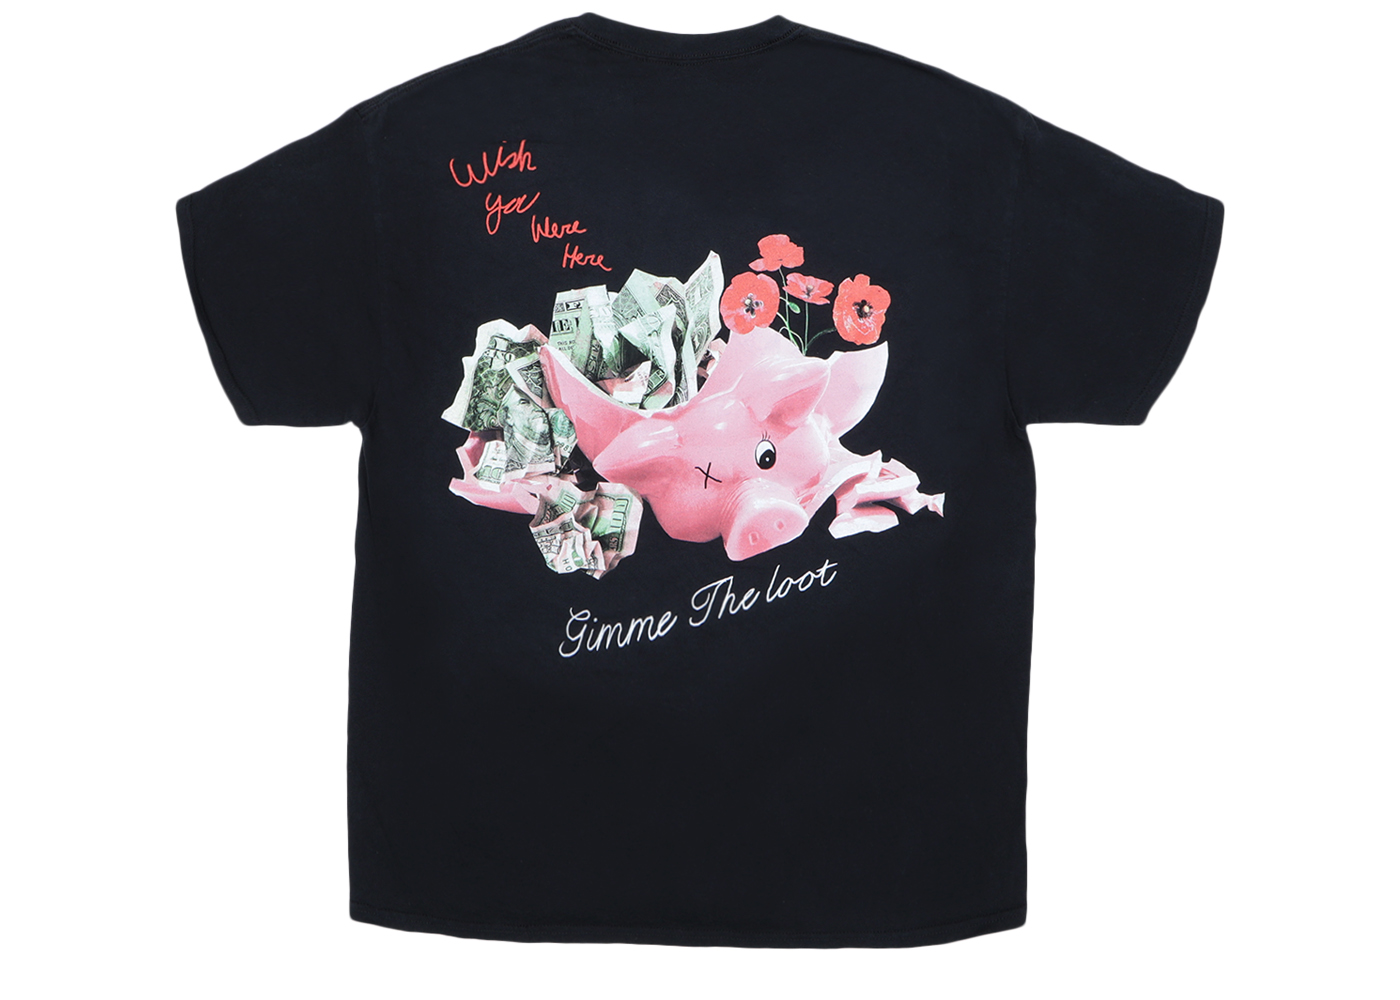 Travis Scott Astroworld Barclays Pig Black T-Shirt Men's Size S-XXL 93665-256